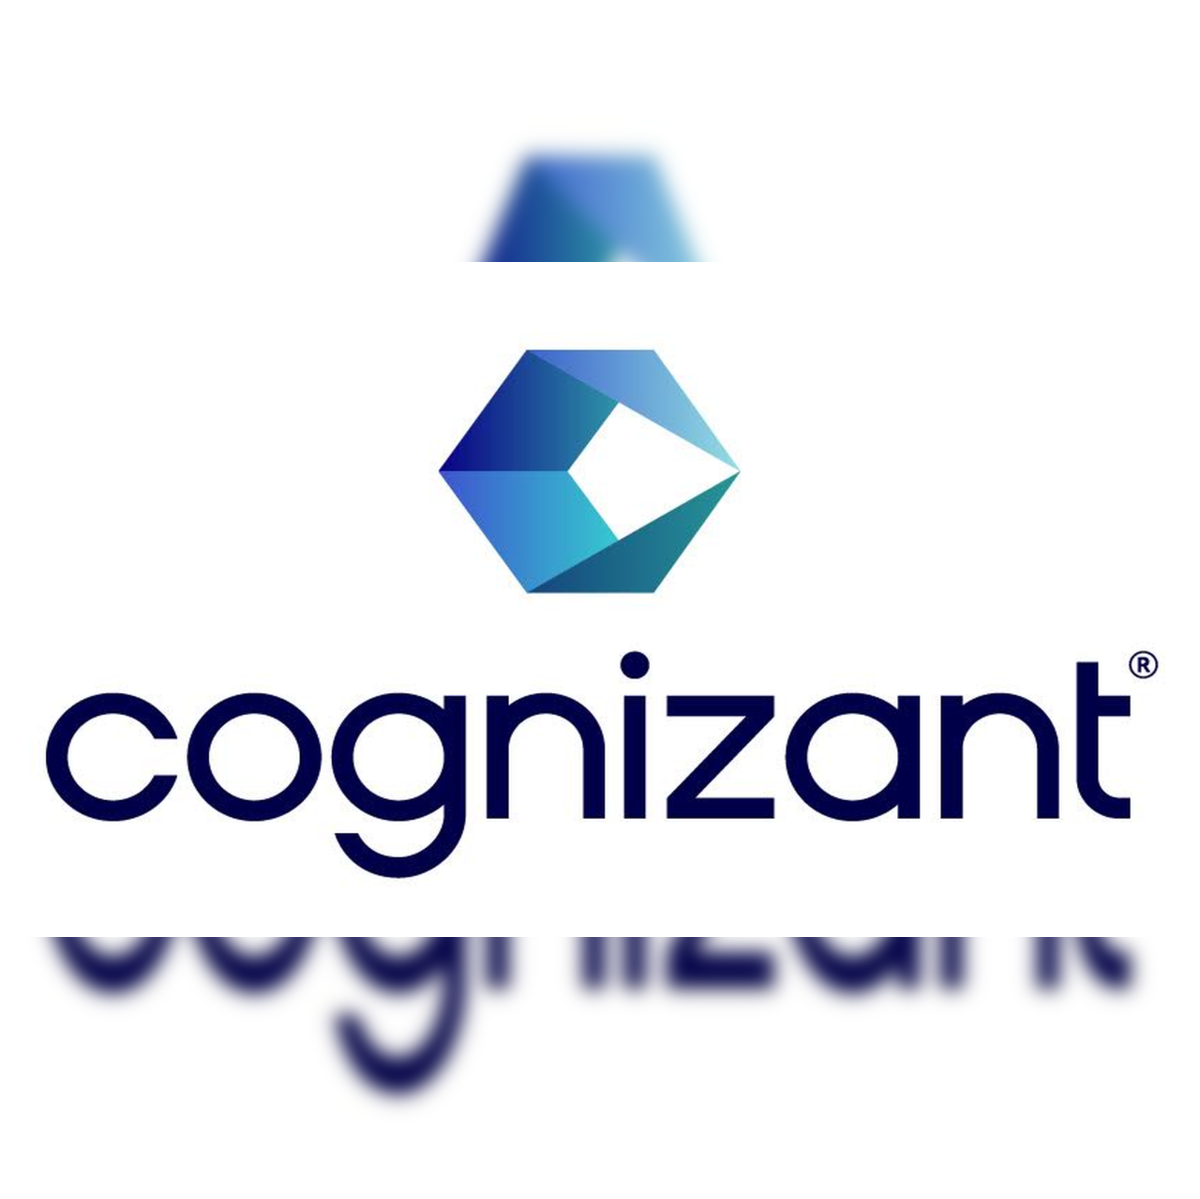 Cognizant Logo Transparent - Cash Analytics Transparent PNG - 705x274 -  Free Download on NicePNG